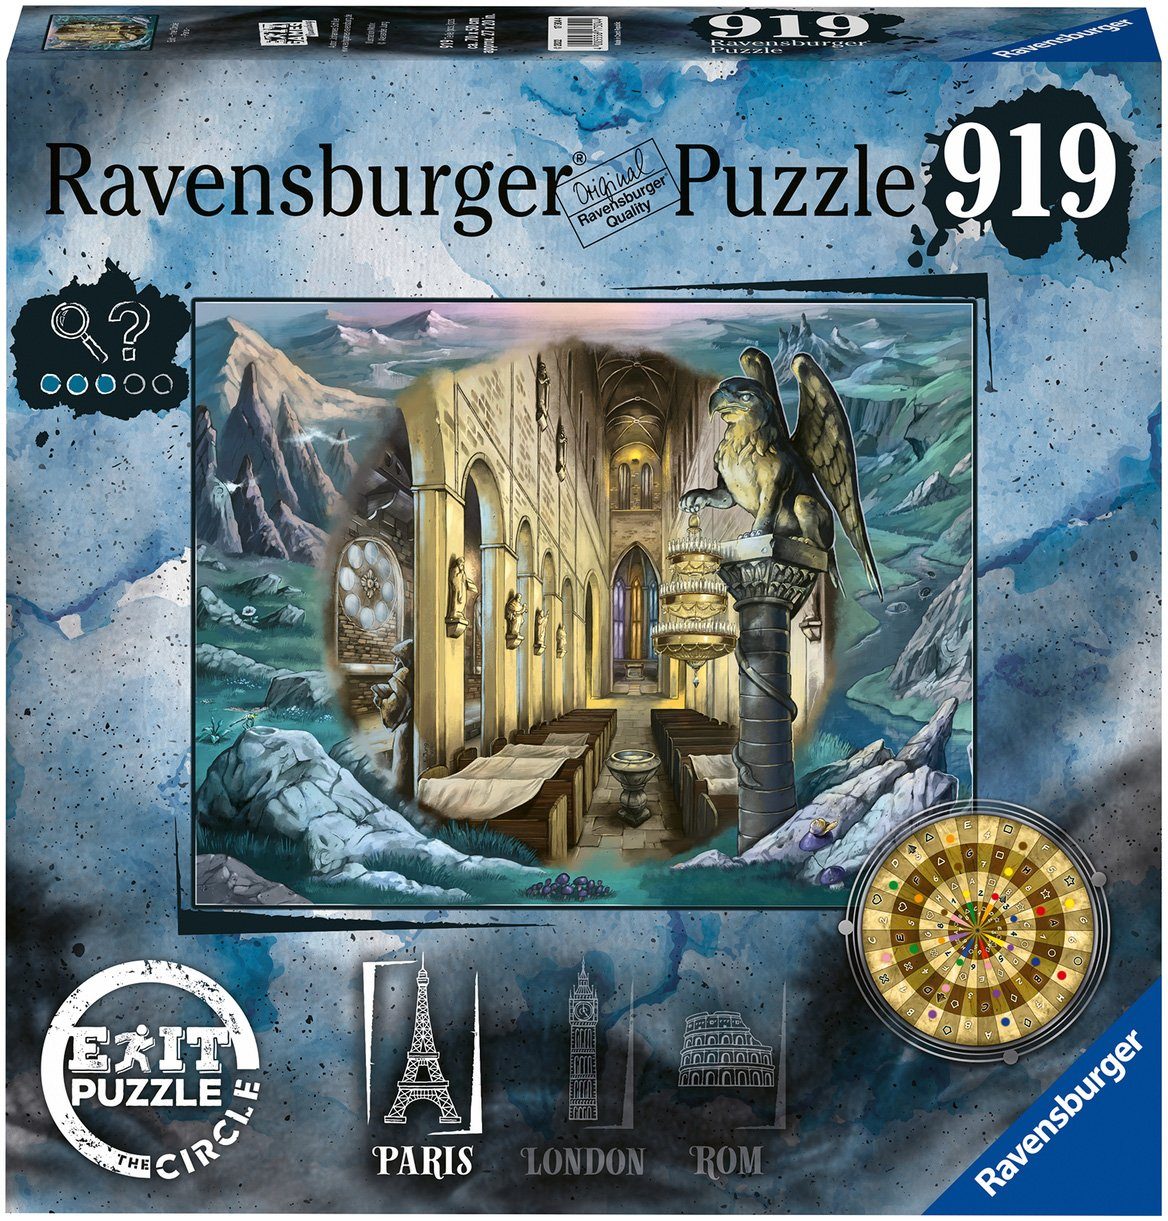 Ravensburger Puzzle Exit: the Circle weltweit - schützt - Paris, 919 Europe, Puzzleteile, in Made FSC® Wald in